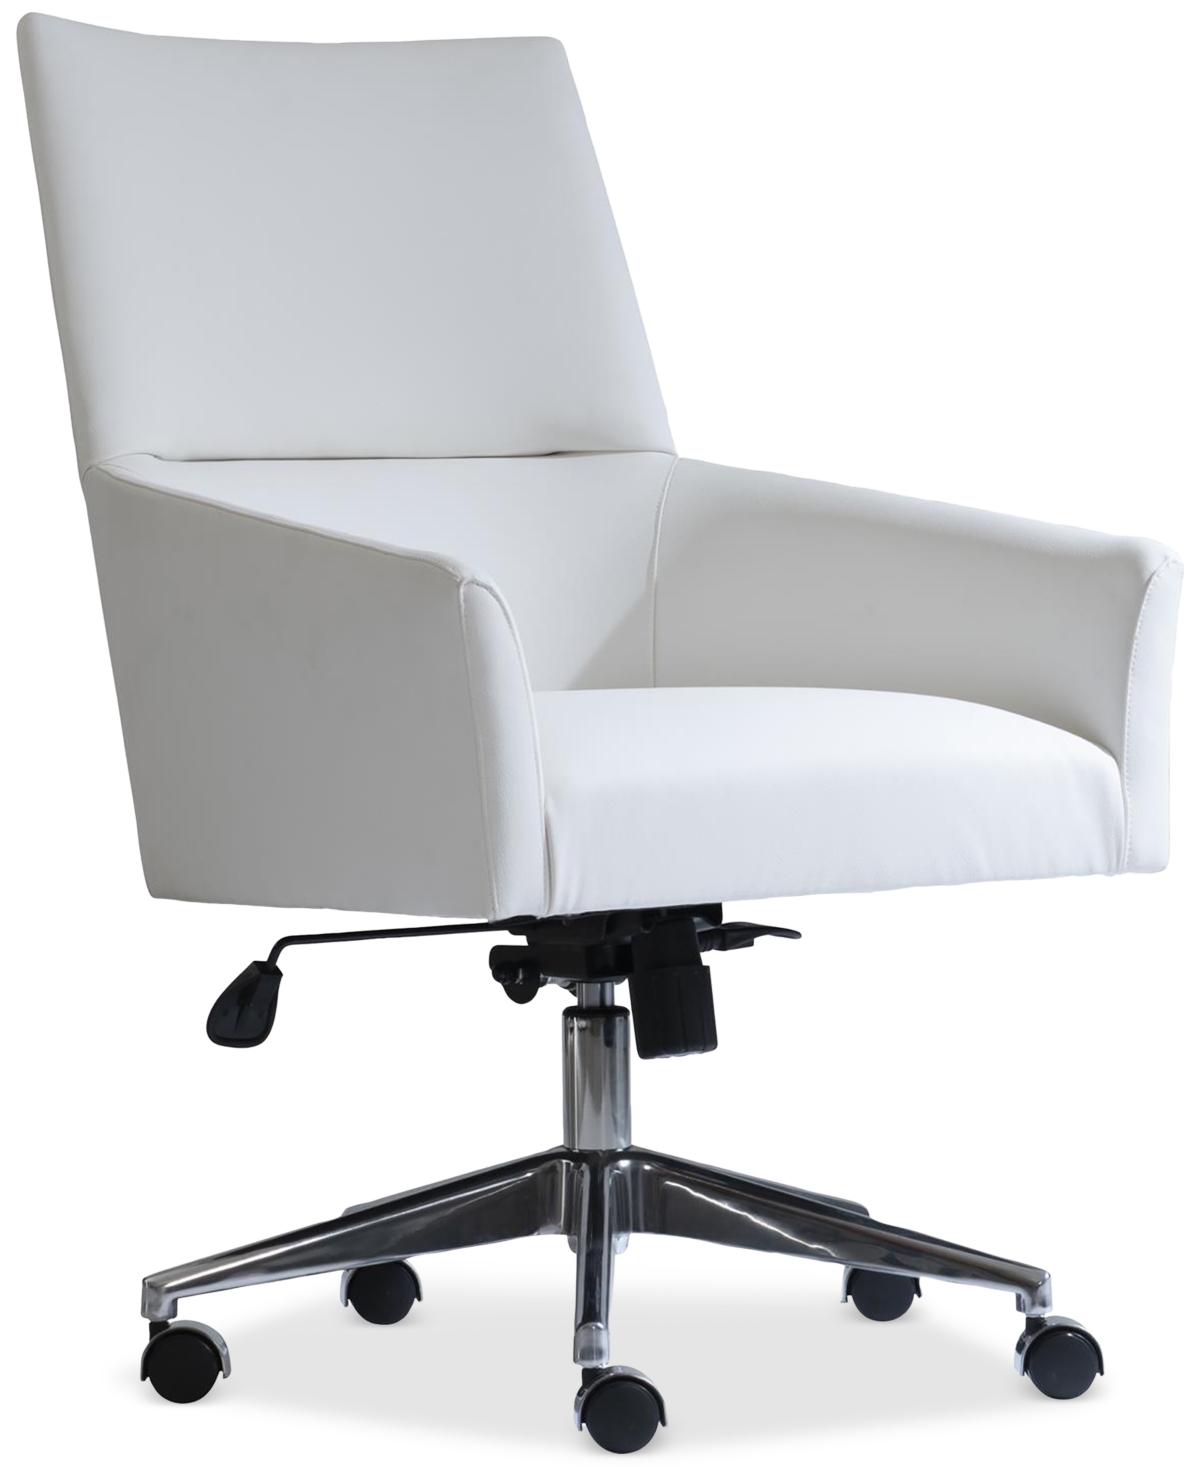 Bernhardt Stratum Office Chair In No Color